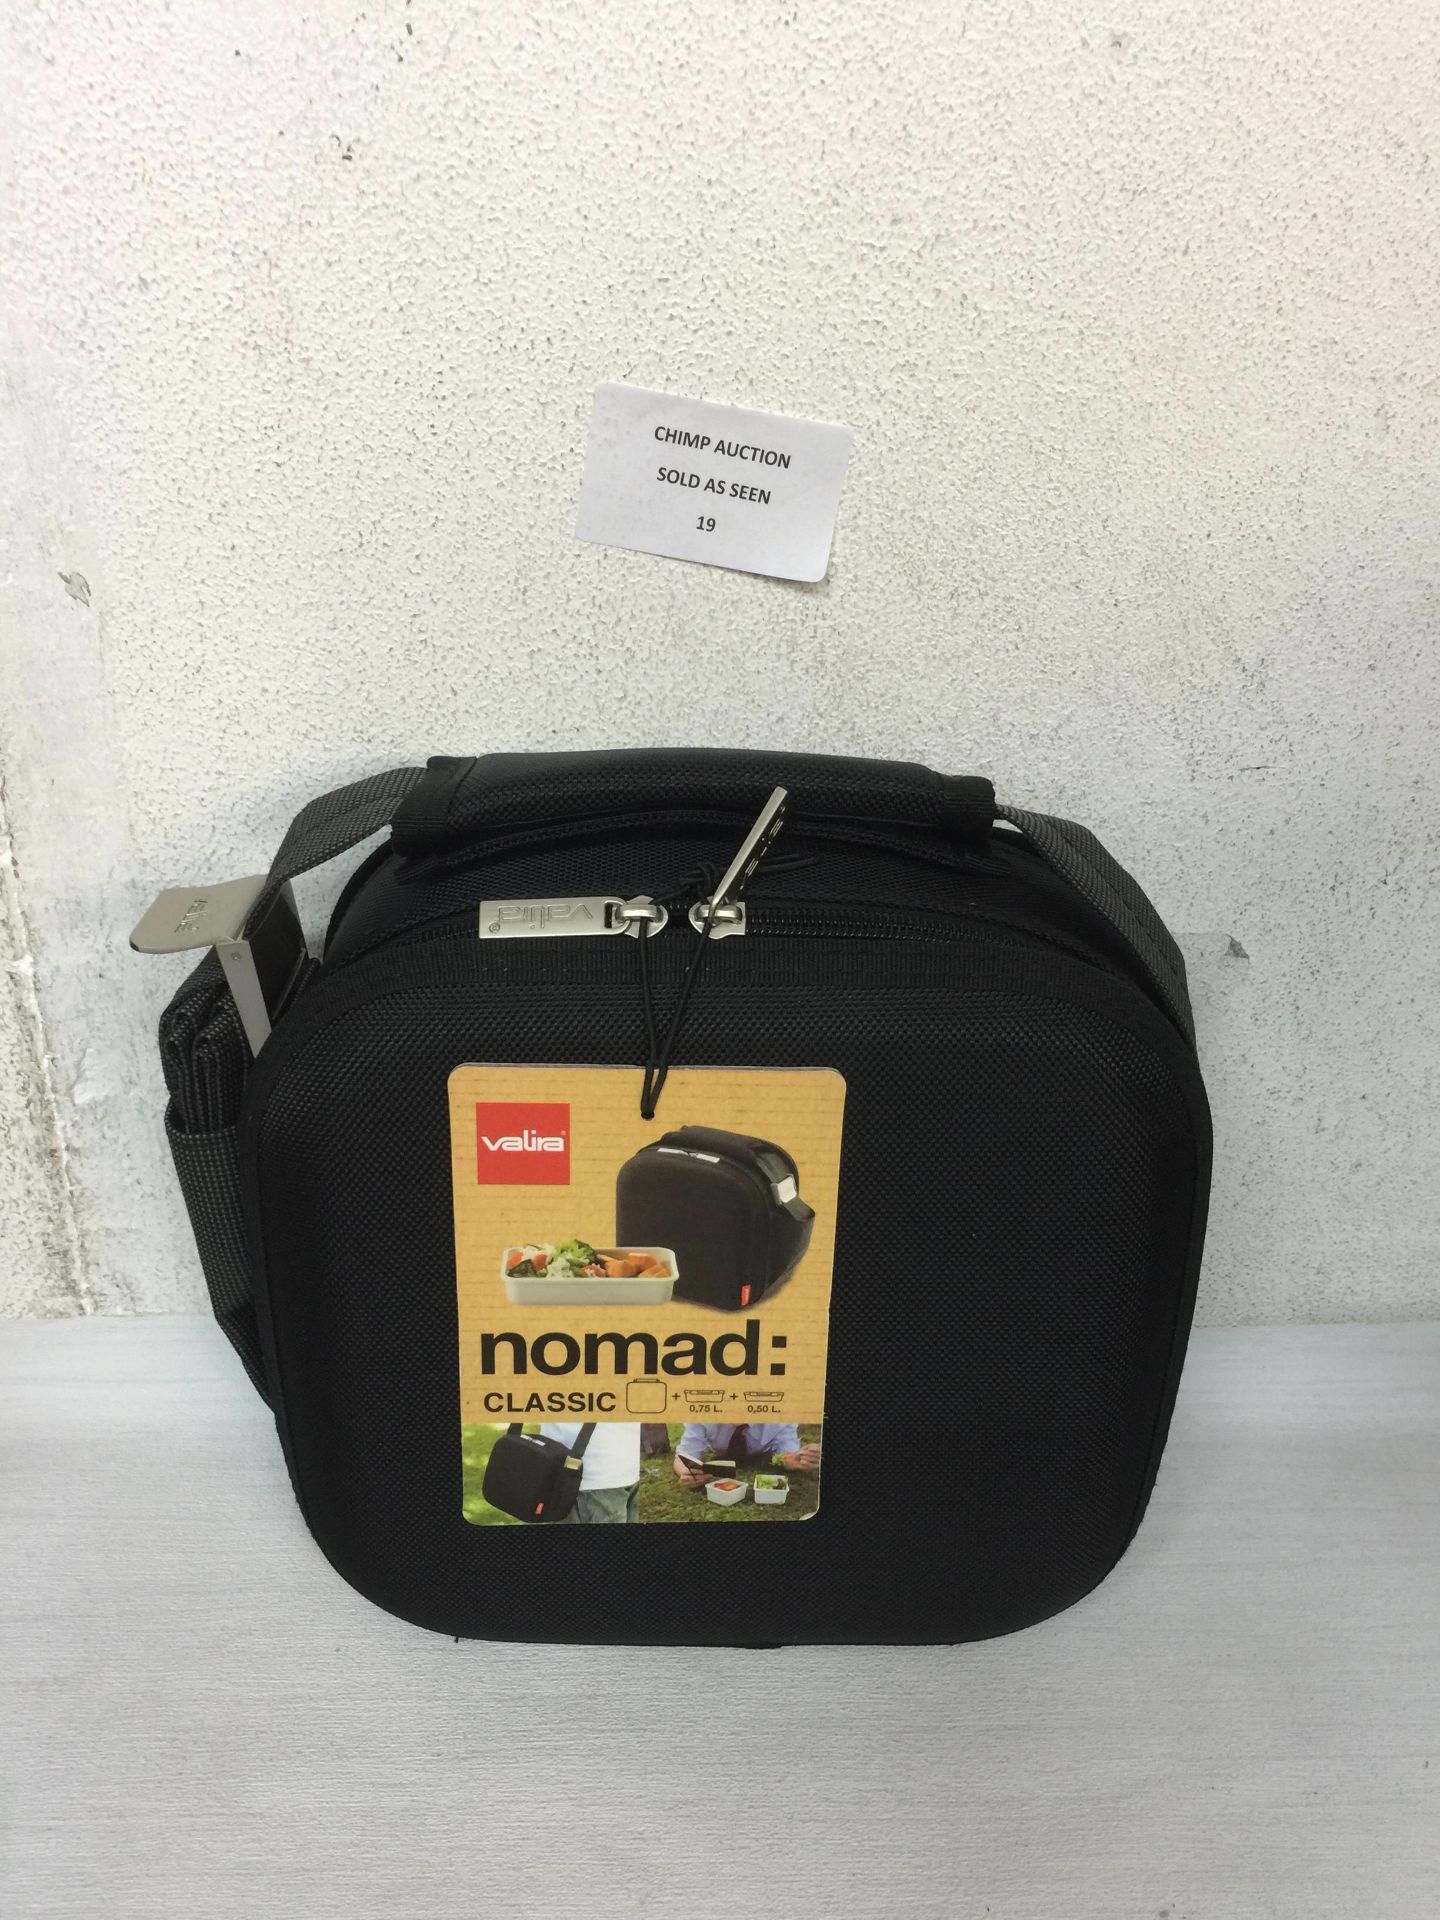 BRAND NEW Valira Nomad Classic Lunch Bag